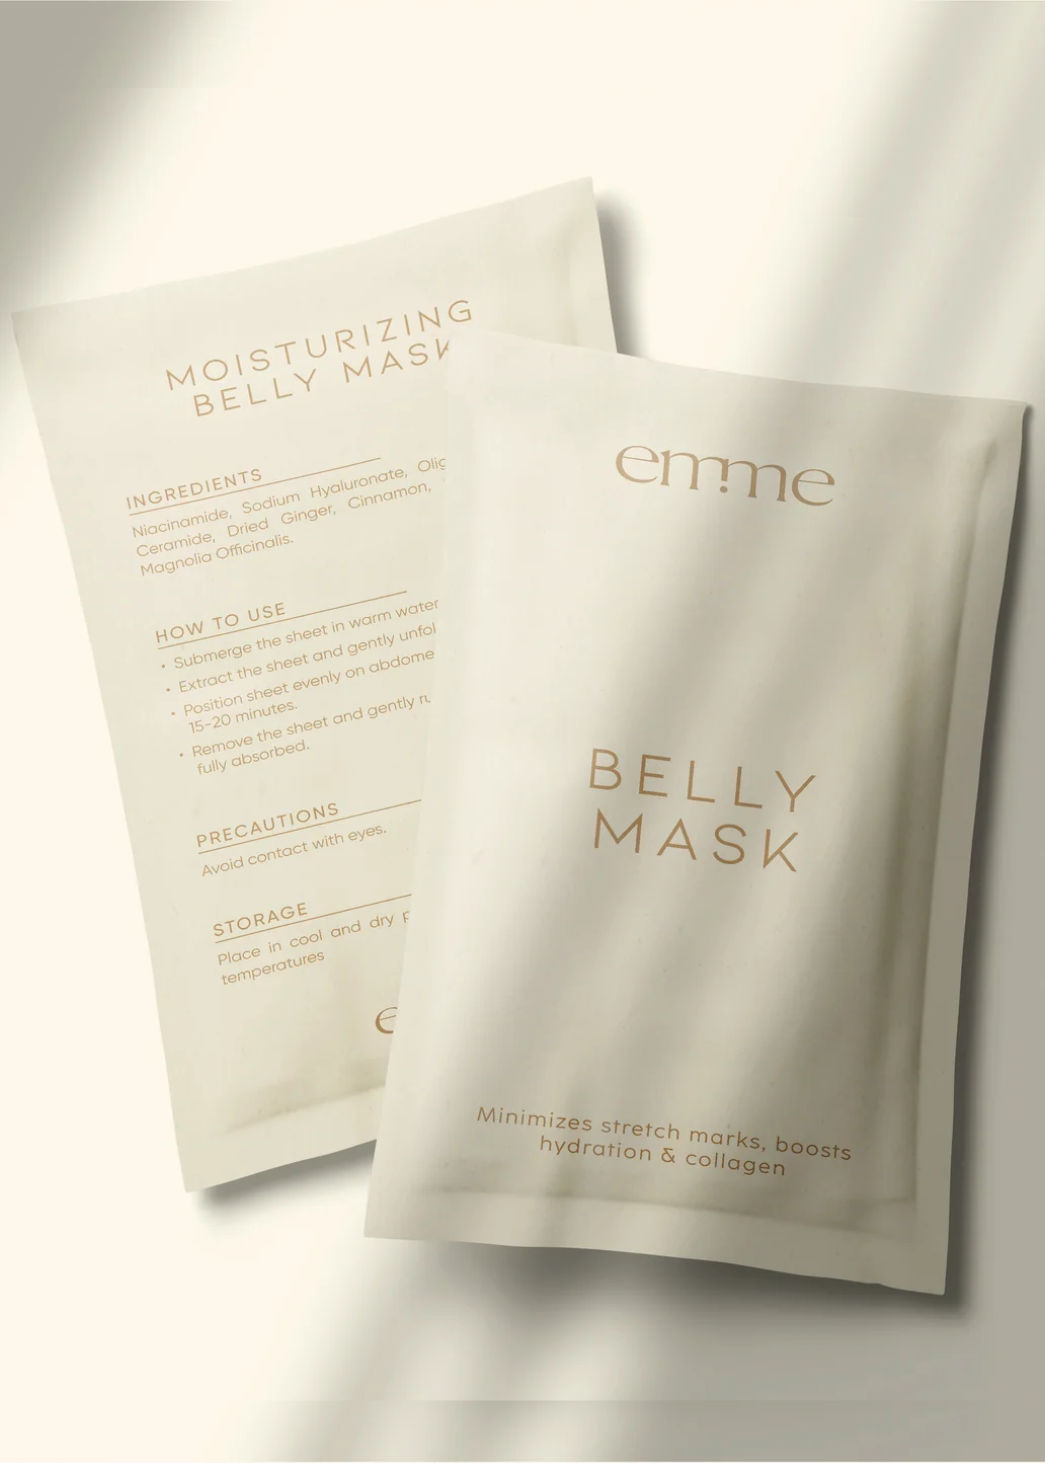 Moisturizing Belly Sheet Mask